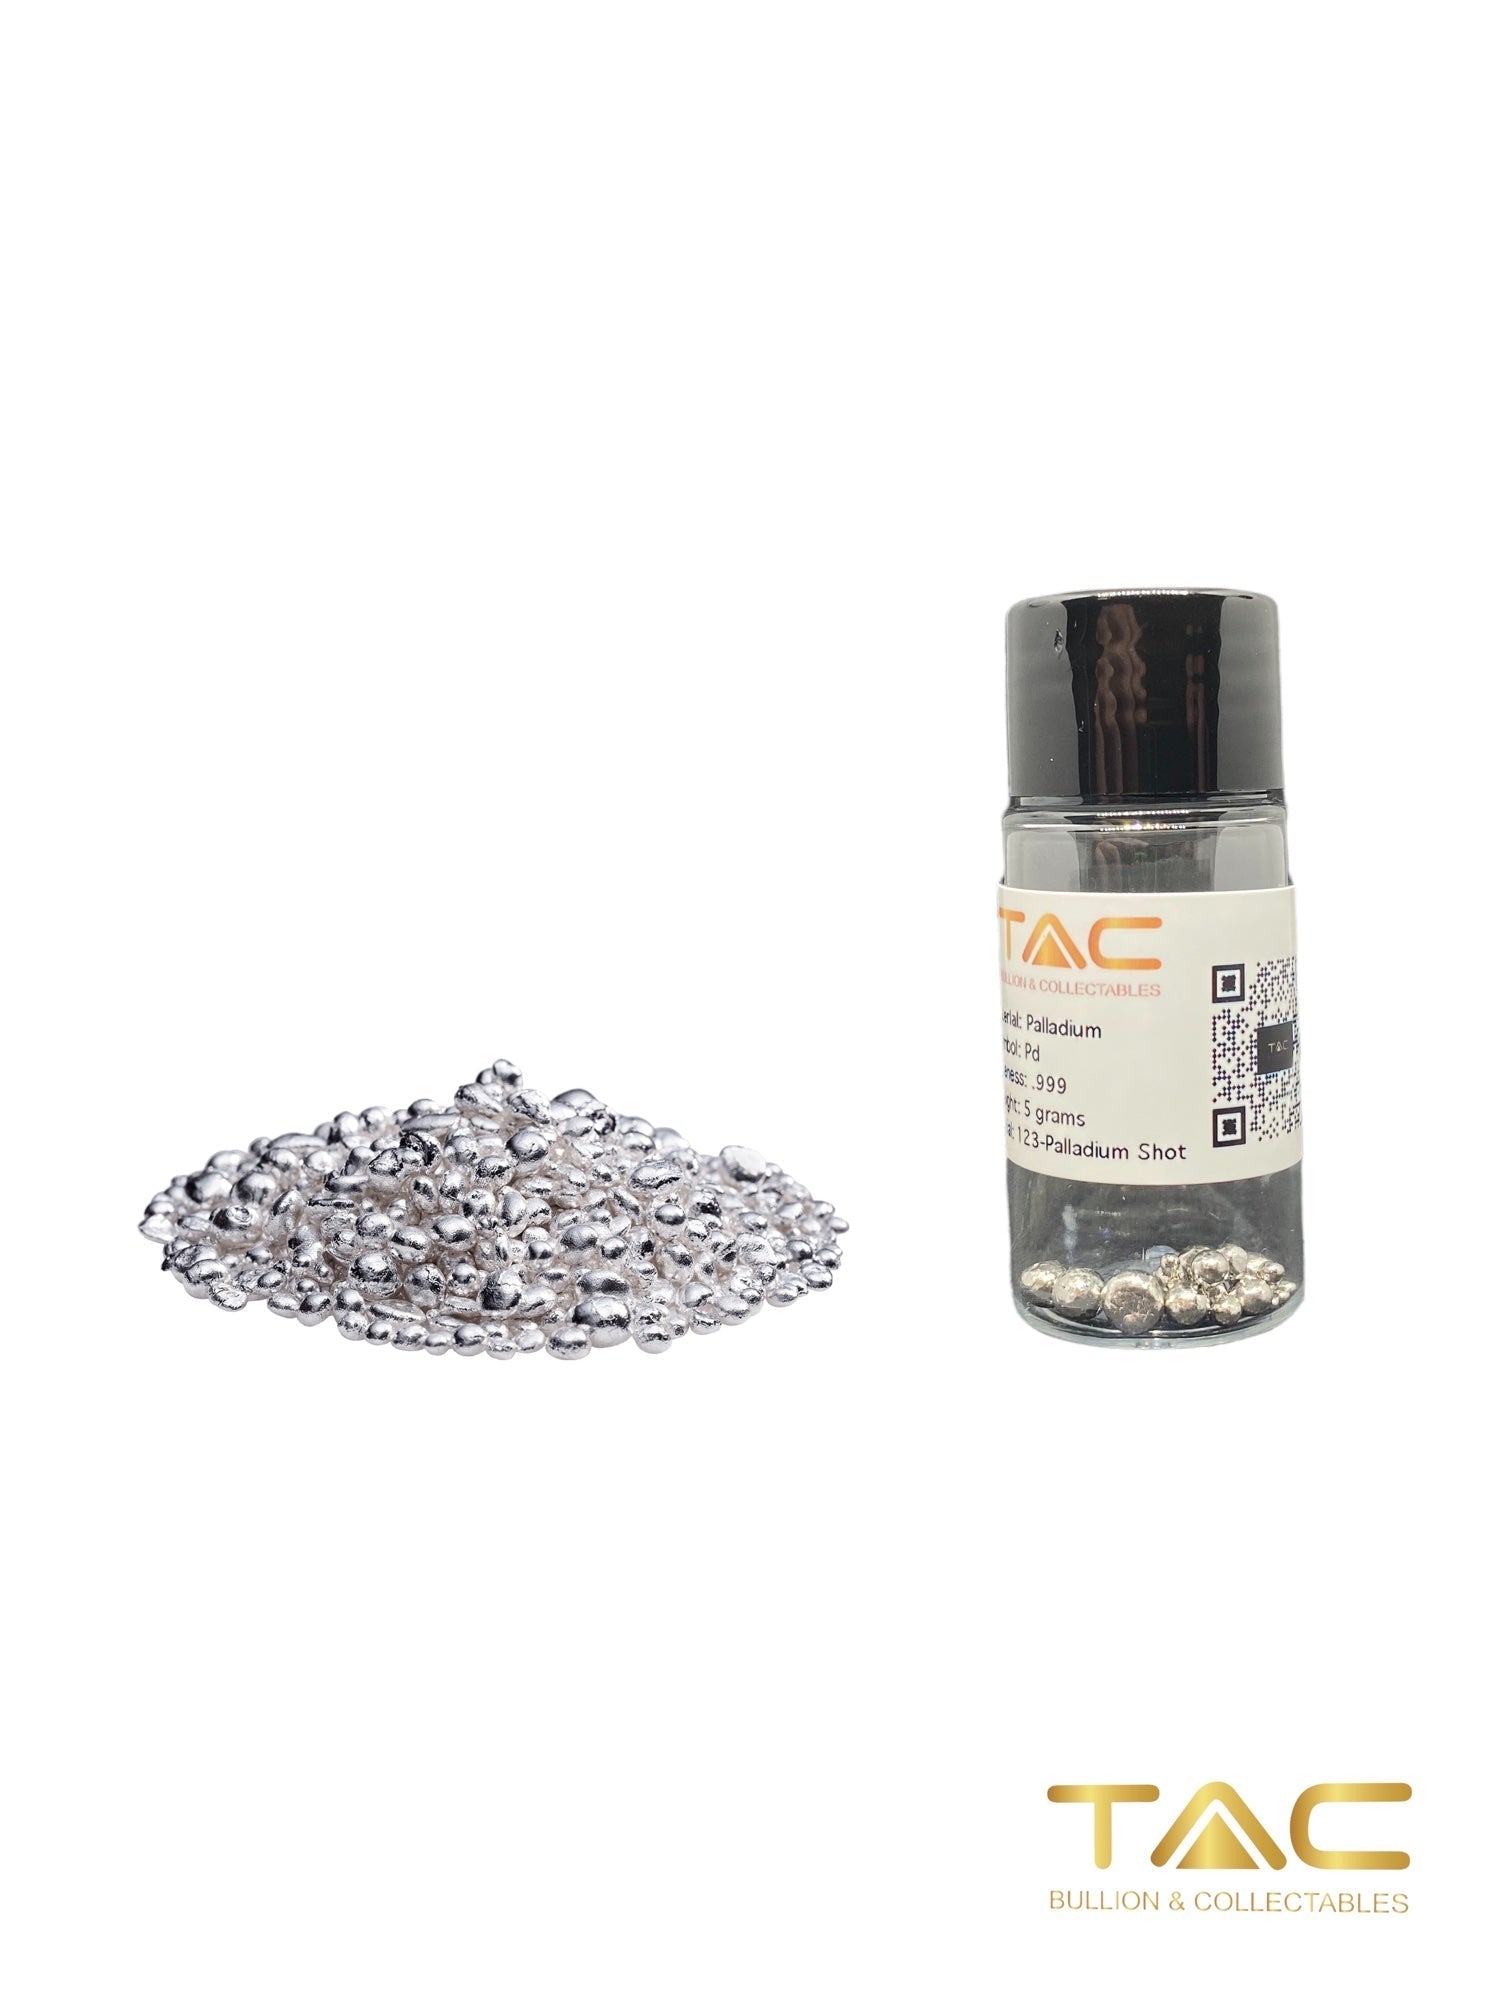 1 gram Palladium Shot/ Granule - 999 Fine Palladium w/ COA - TAC Bullion #10PDSG042201